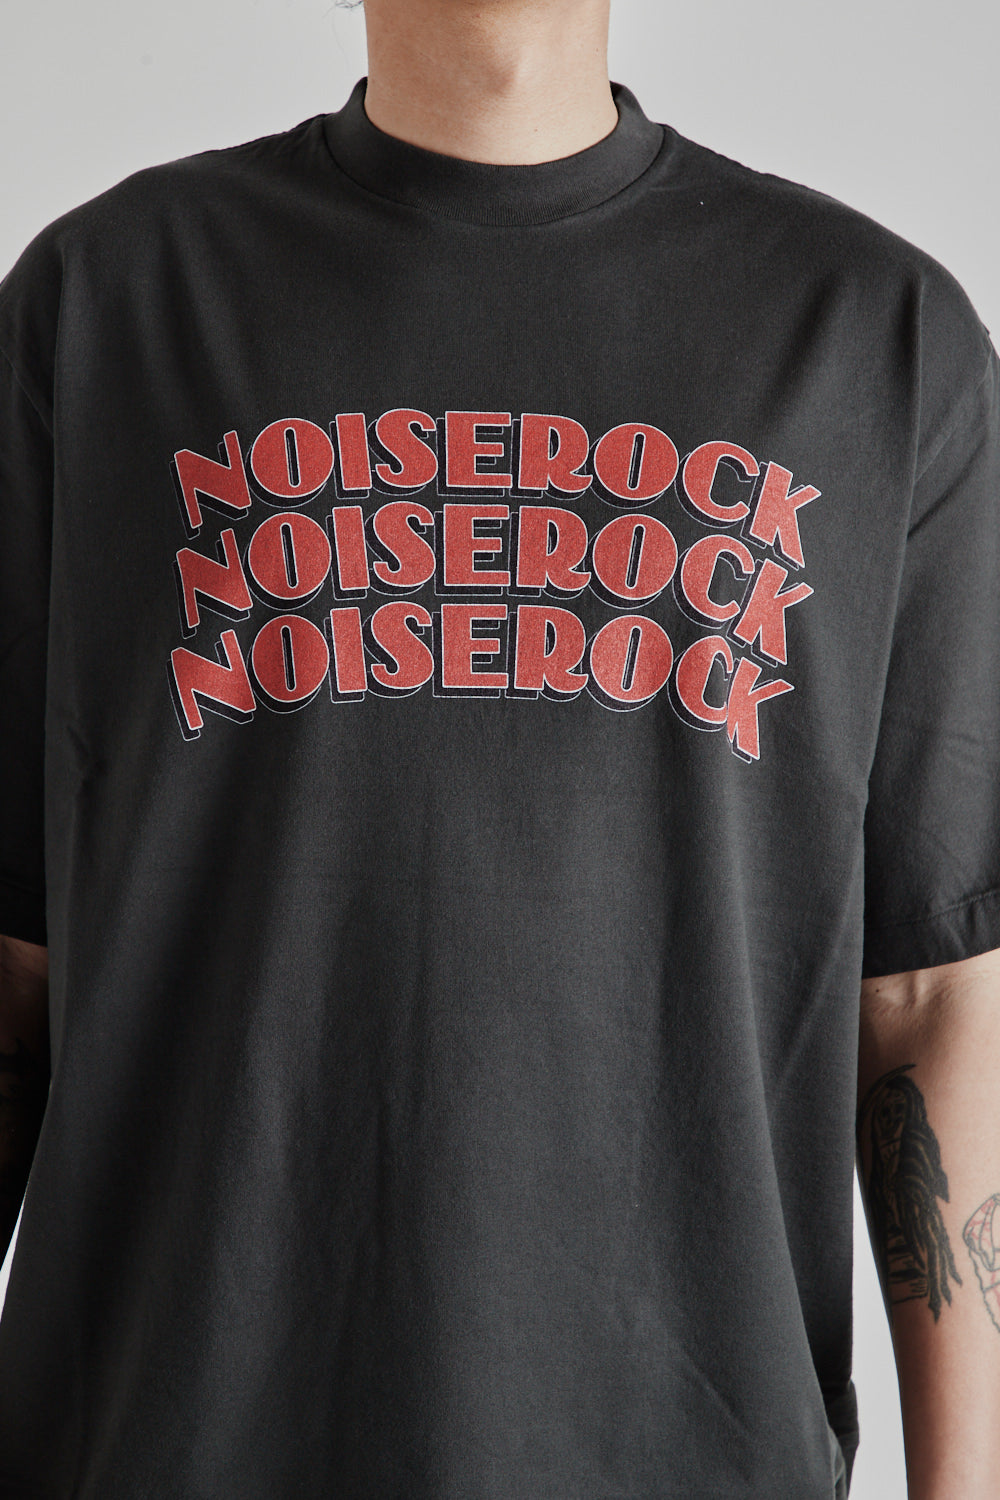 Blurhms Rootstock Noise Rock Print Wide Tee in Black